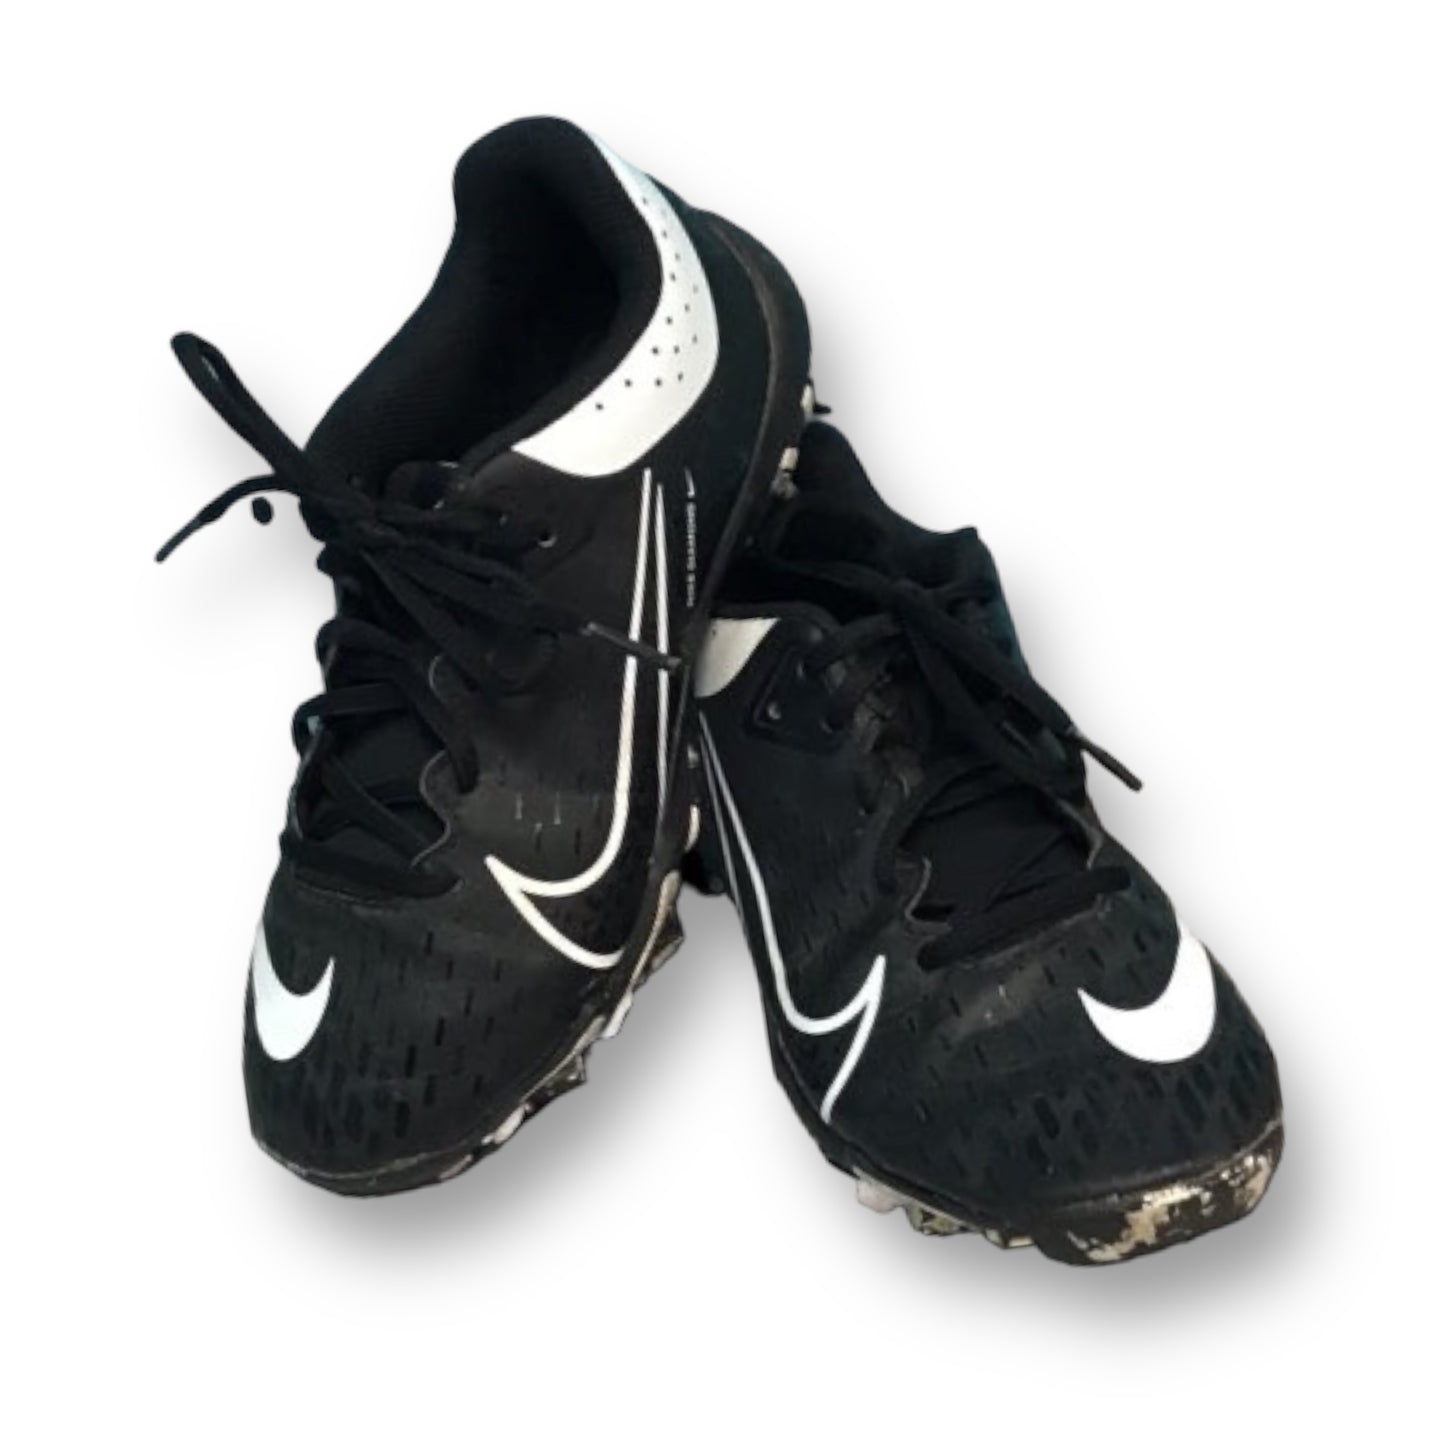 Nike Hyperdiamond Youth Size 3.5 Black Softball Cleats